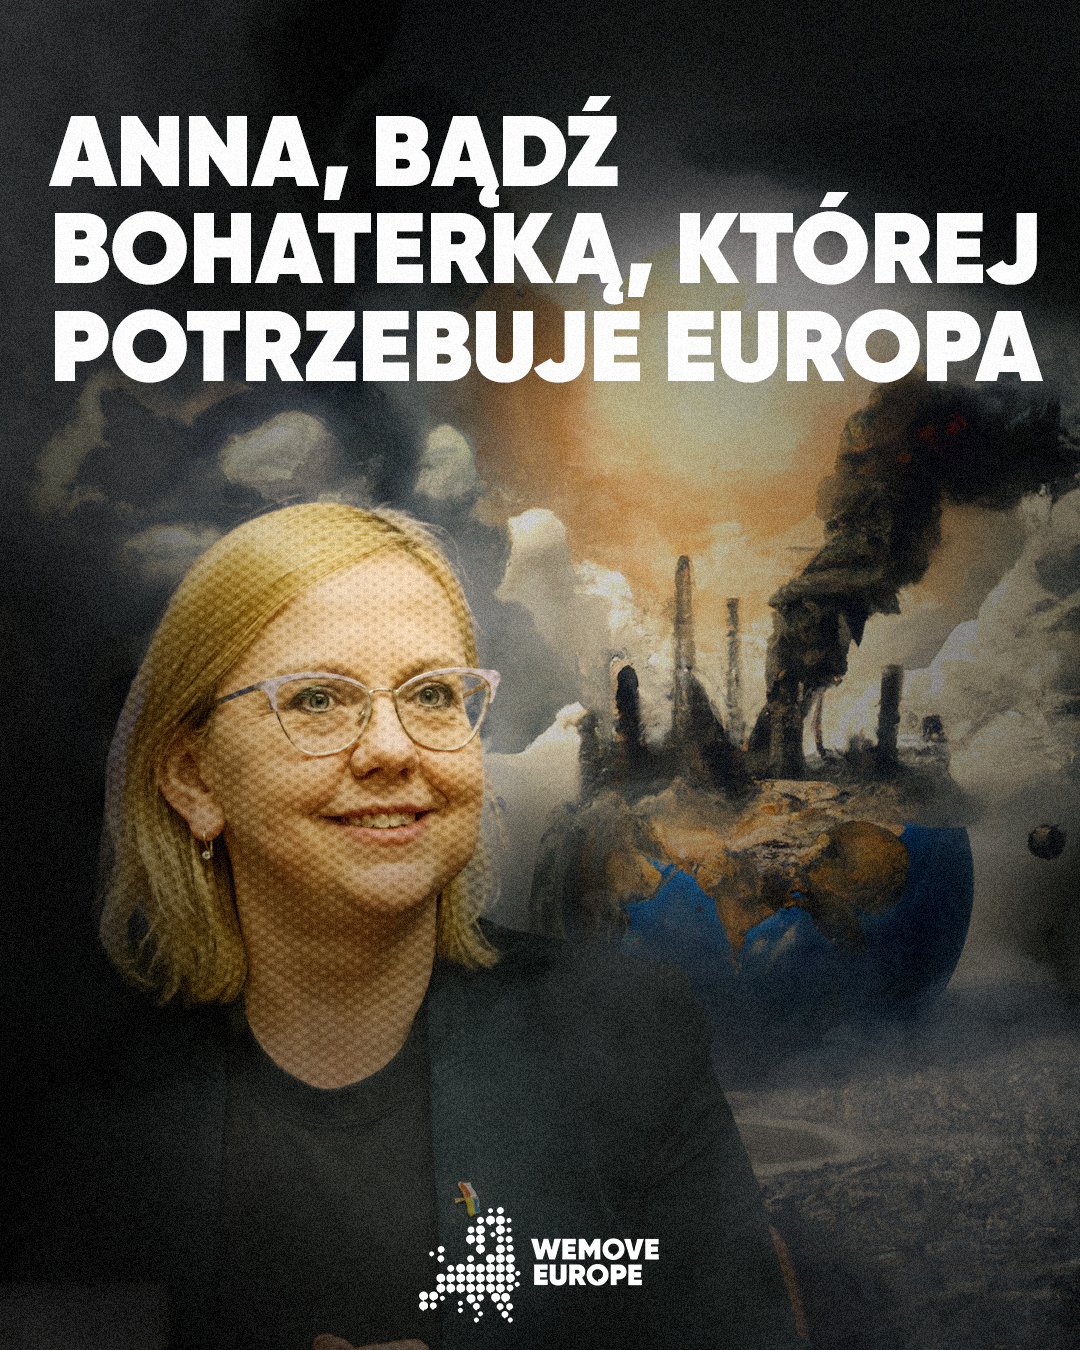 Zdjęcie ministry klimatu Anny Moskwy z napisem 'Anna, bądź bohaterką, której potrzebuje Europa'